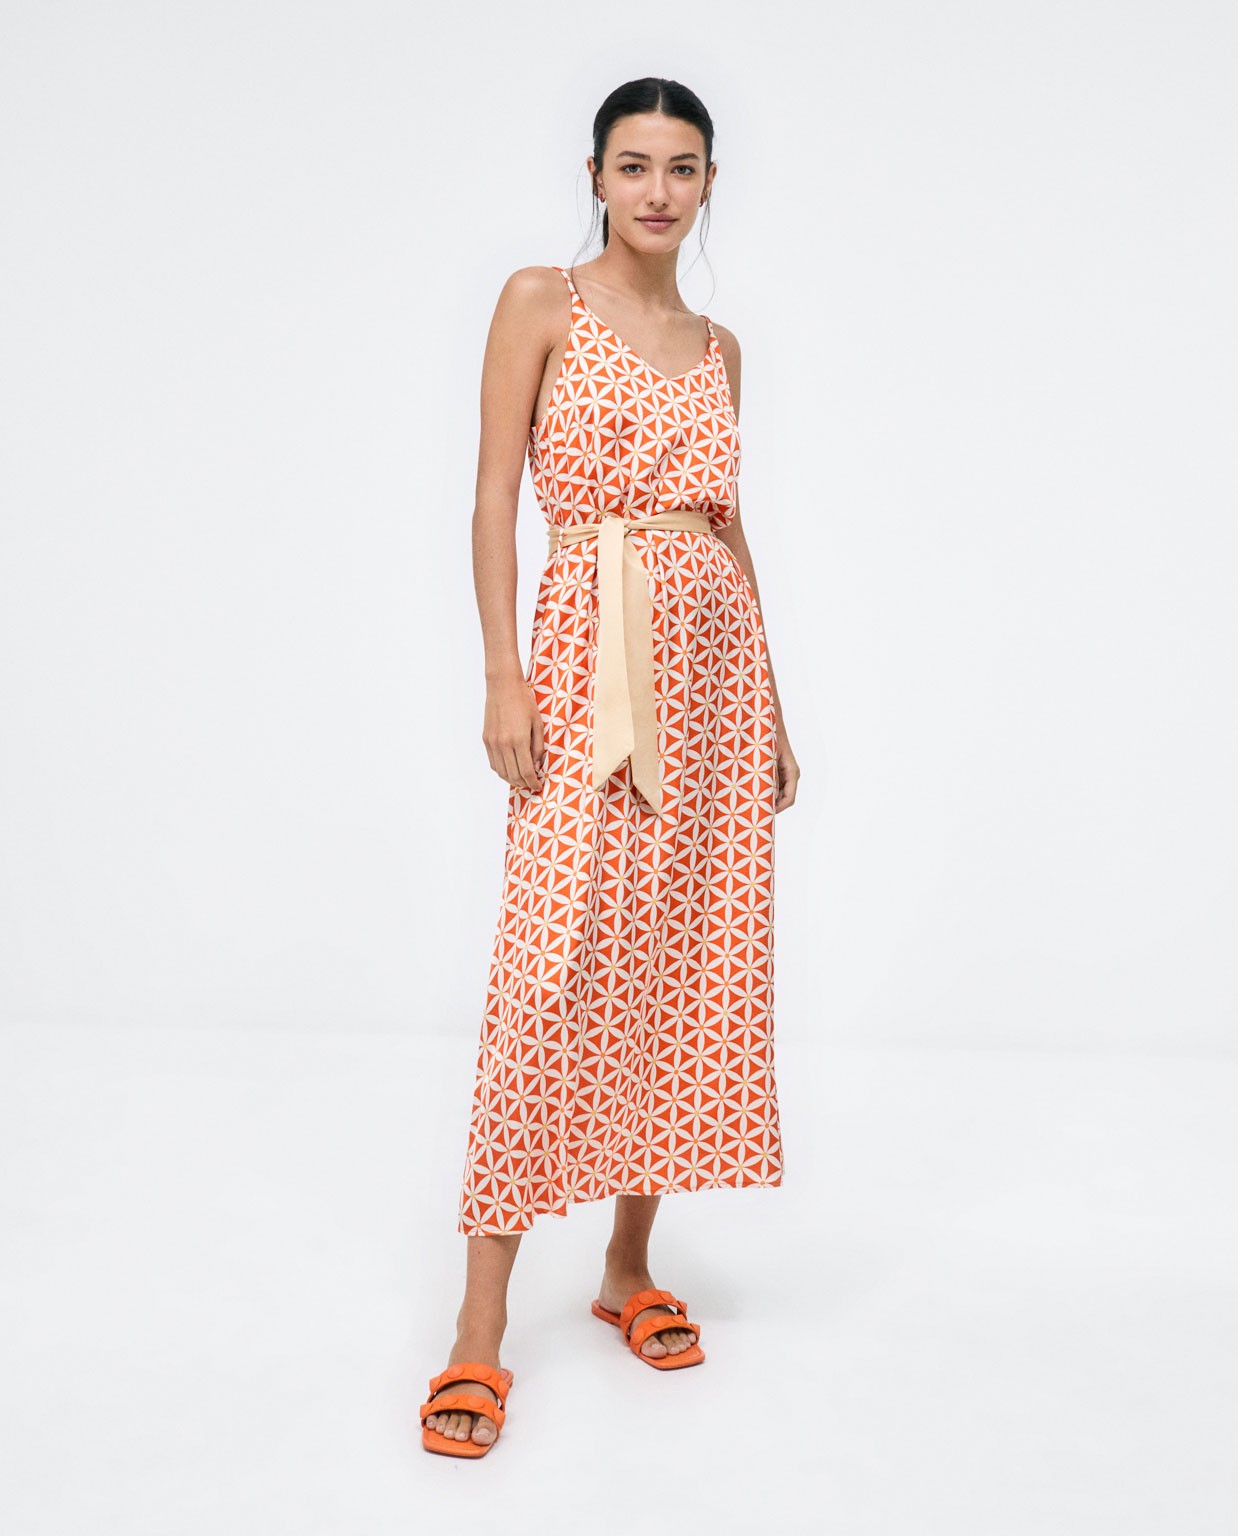 Midi dress with straps and belt. Orange